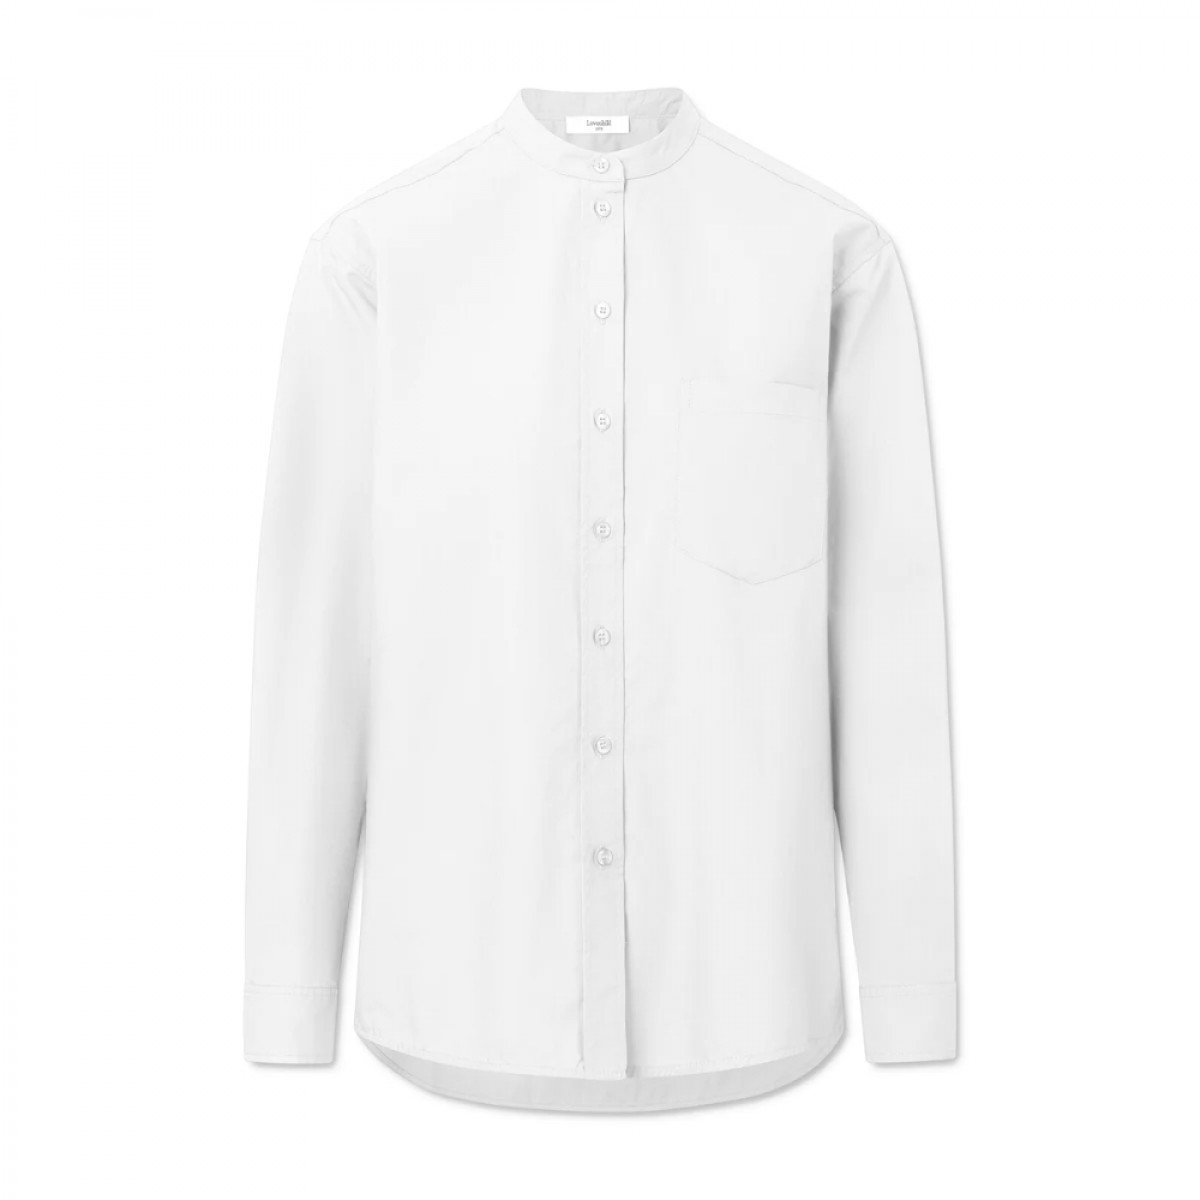 edgar shirt - white - front